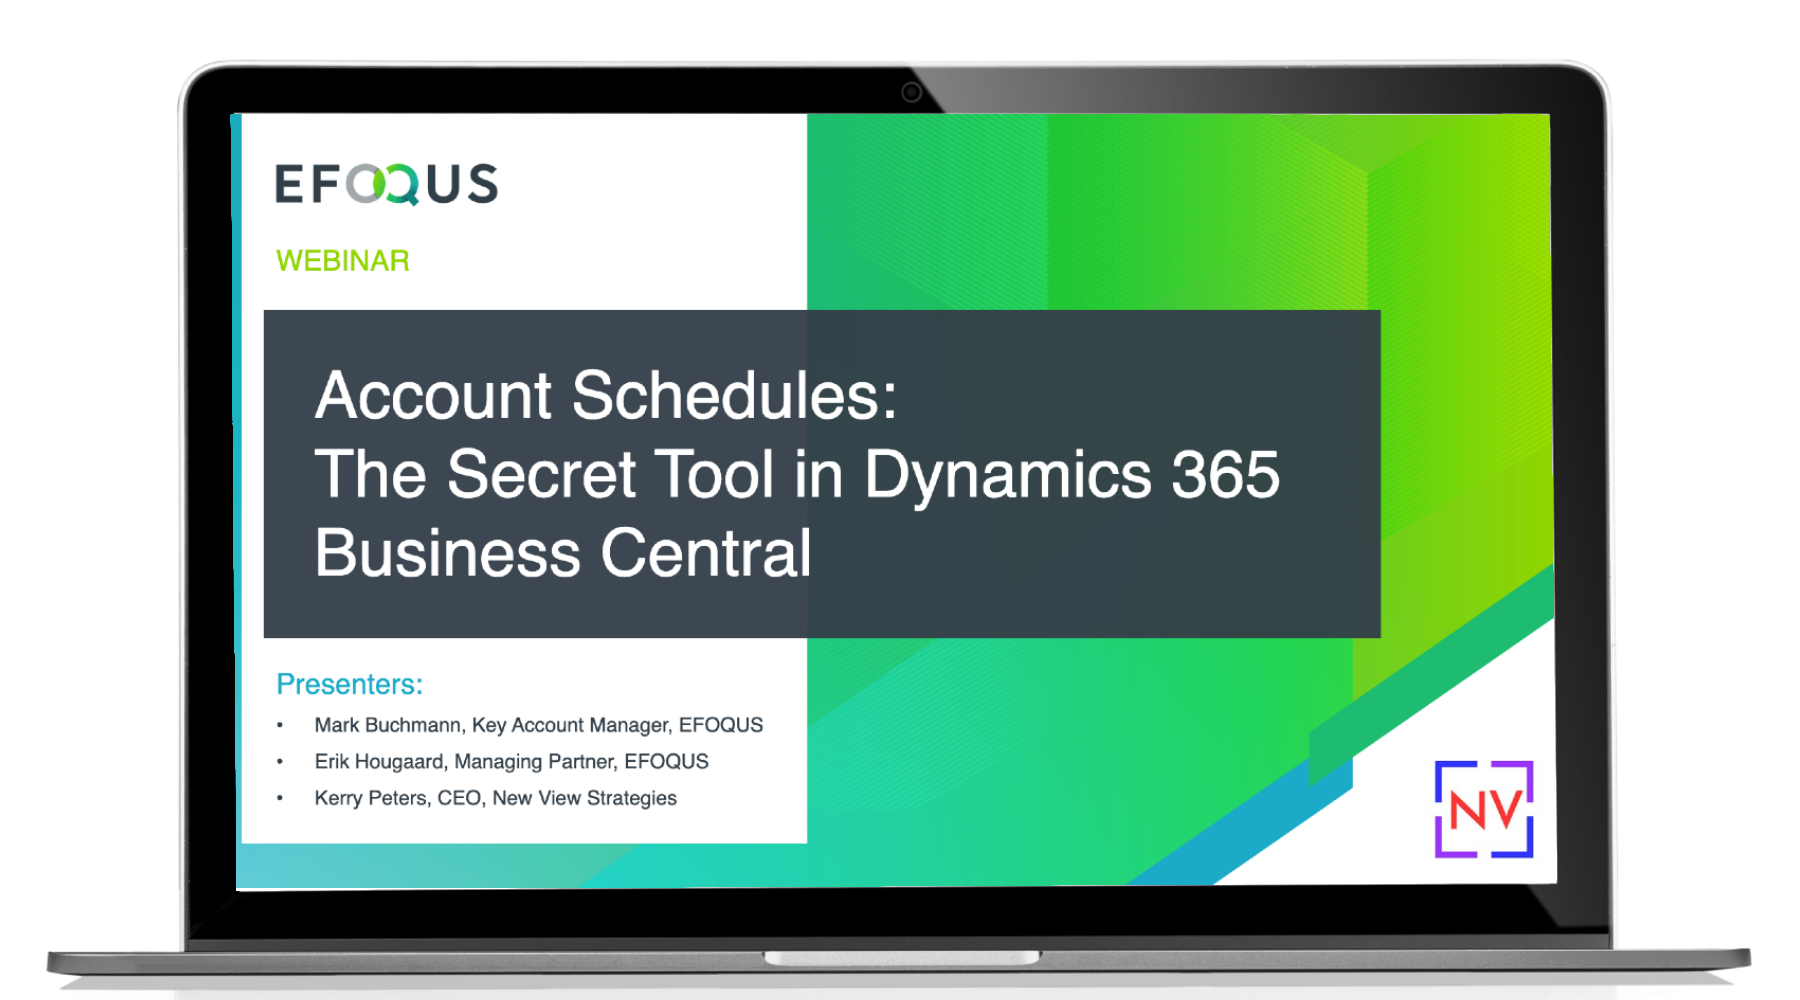 Microsoft Dynamics 365 events - account schedules webinar